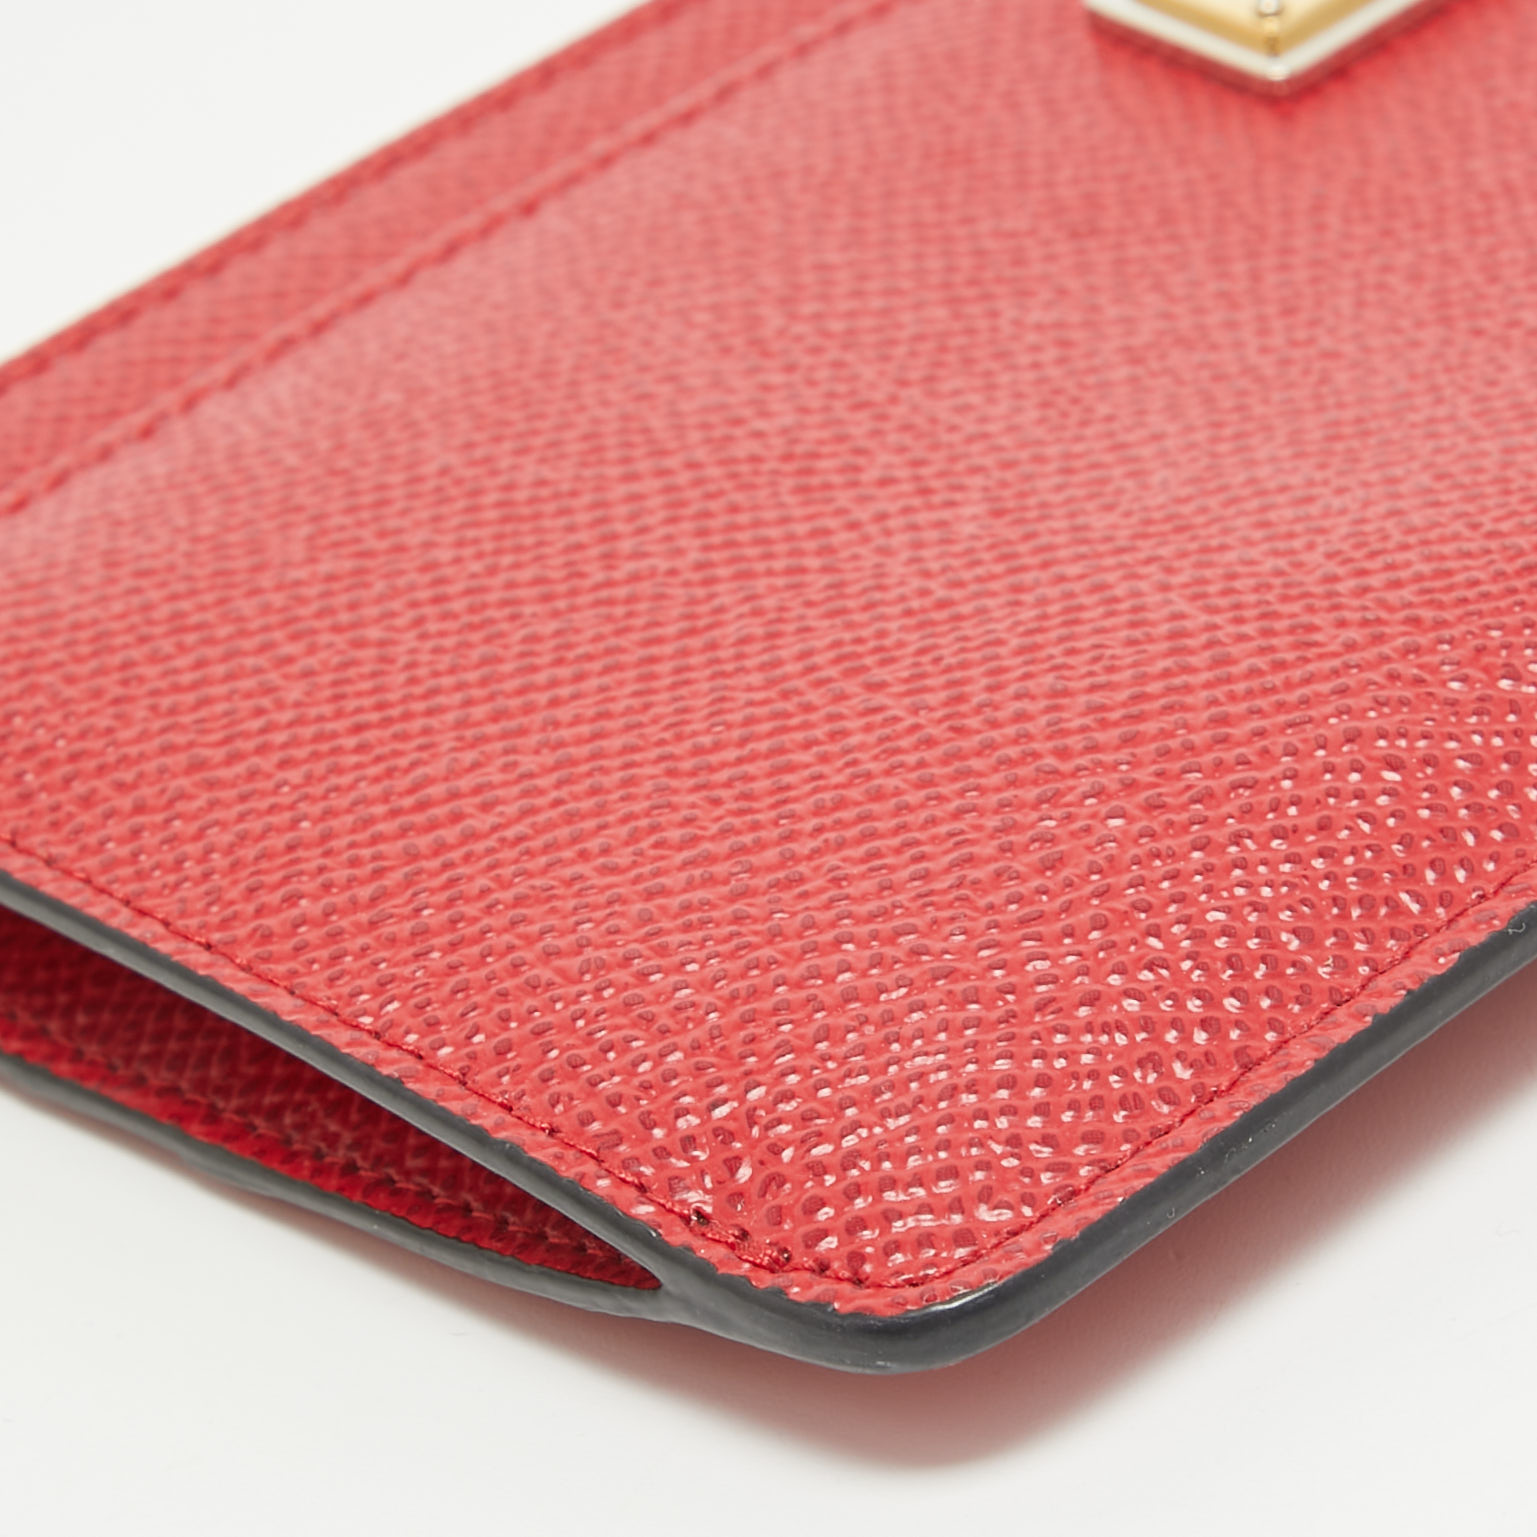 Dolce & Gabbana Red Leather Slim Zip Card Case